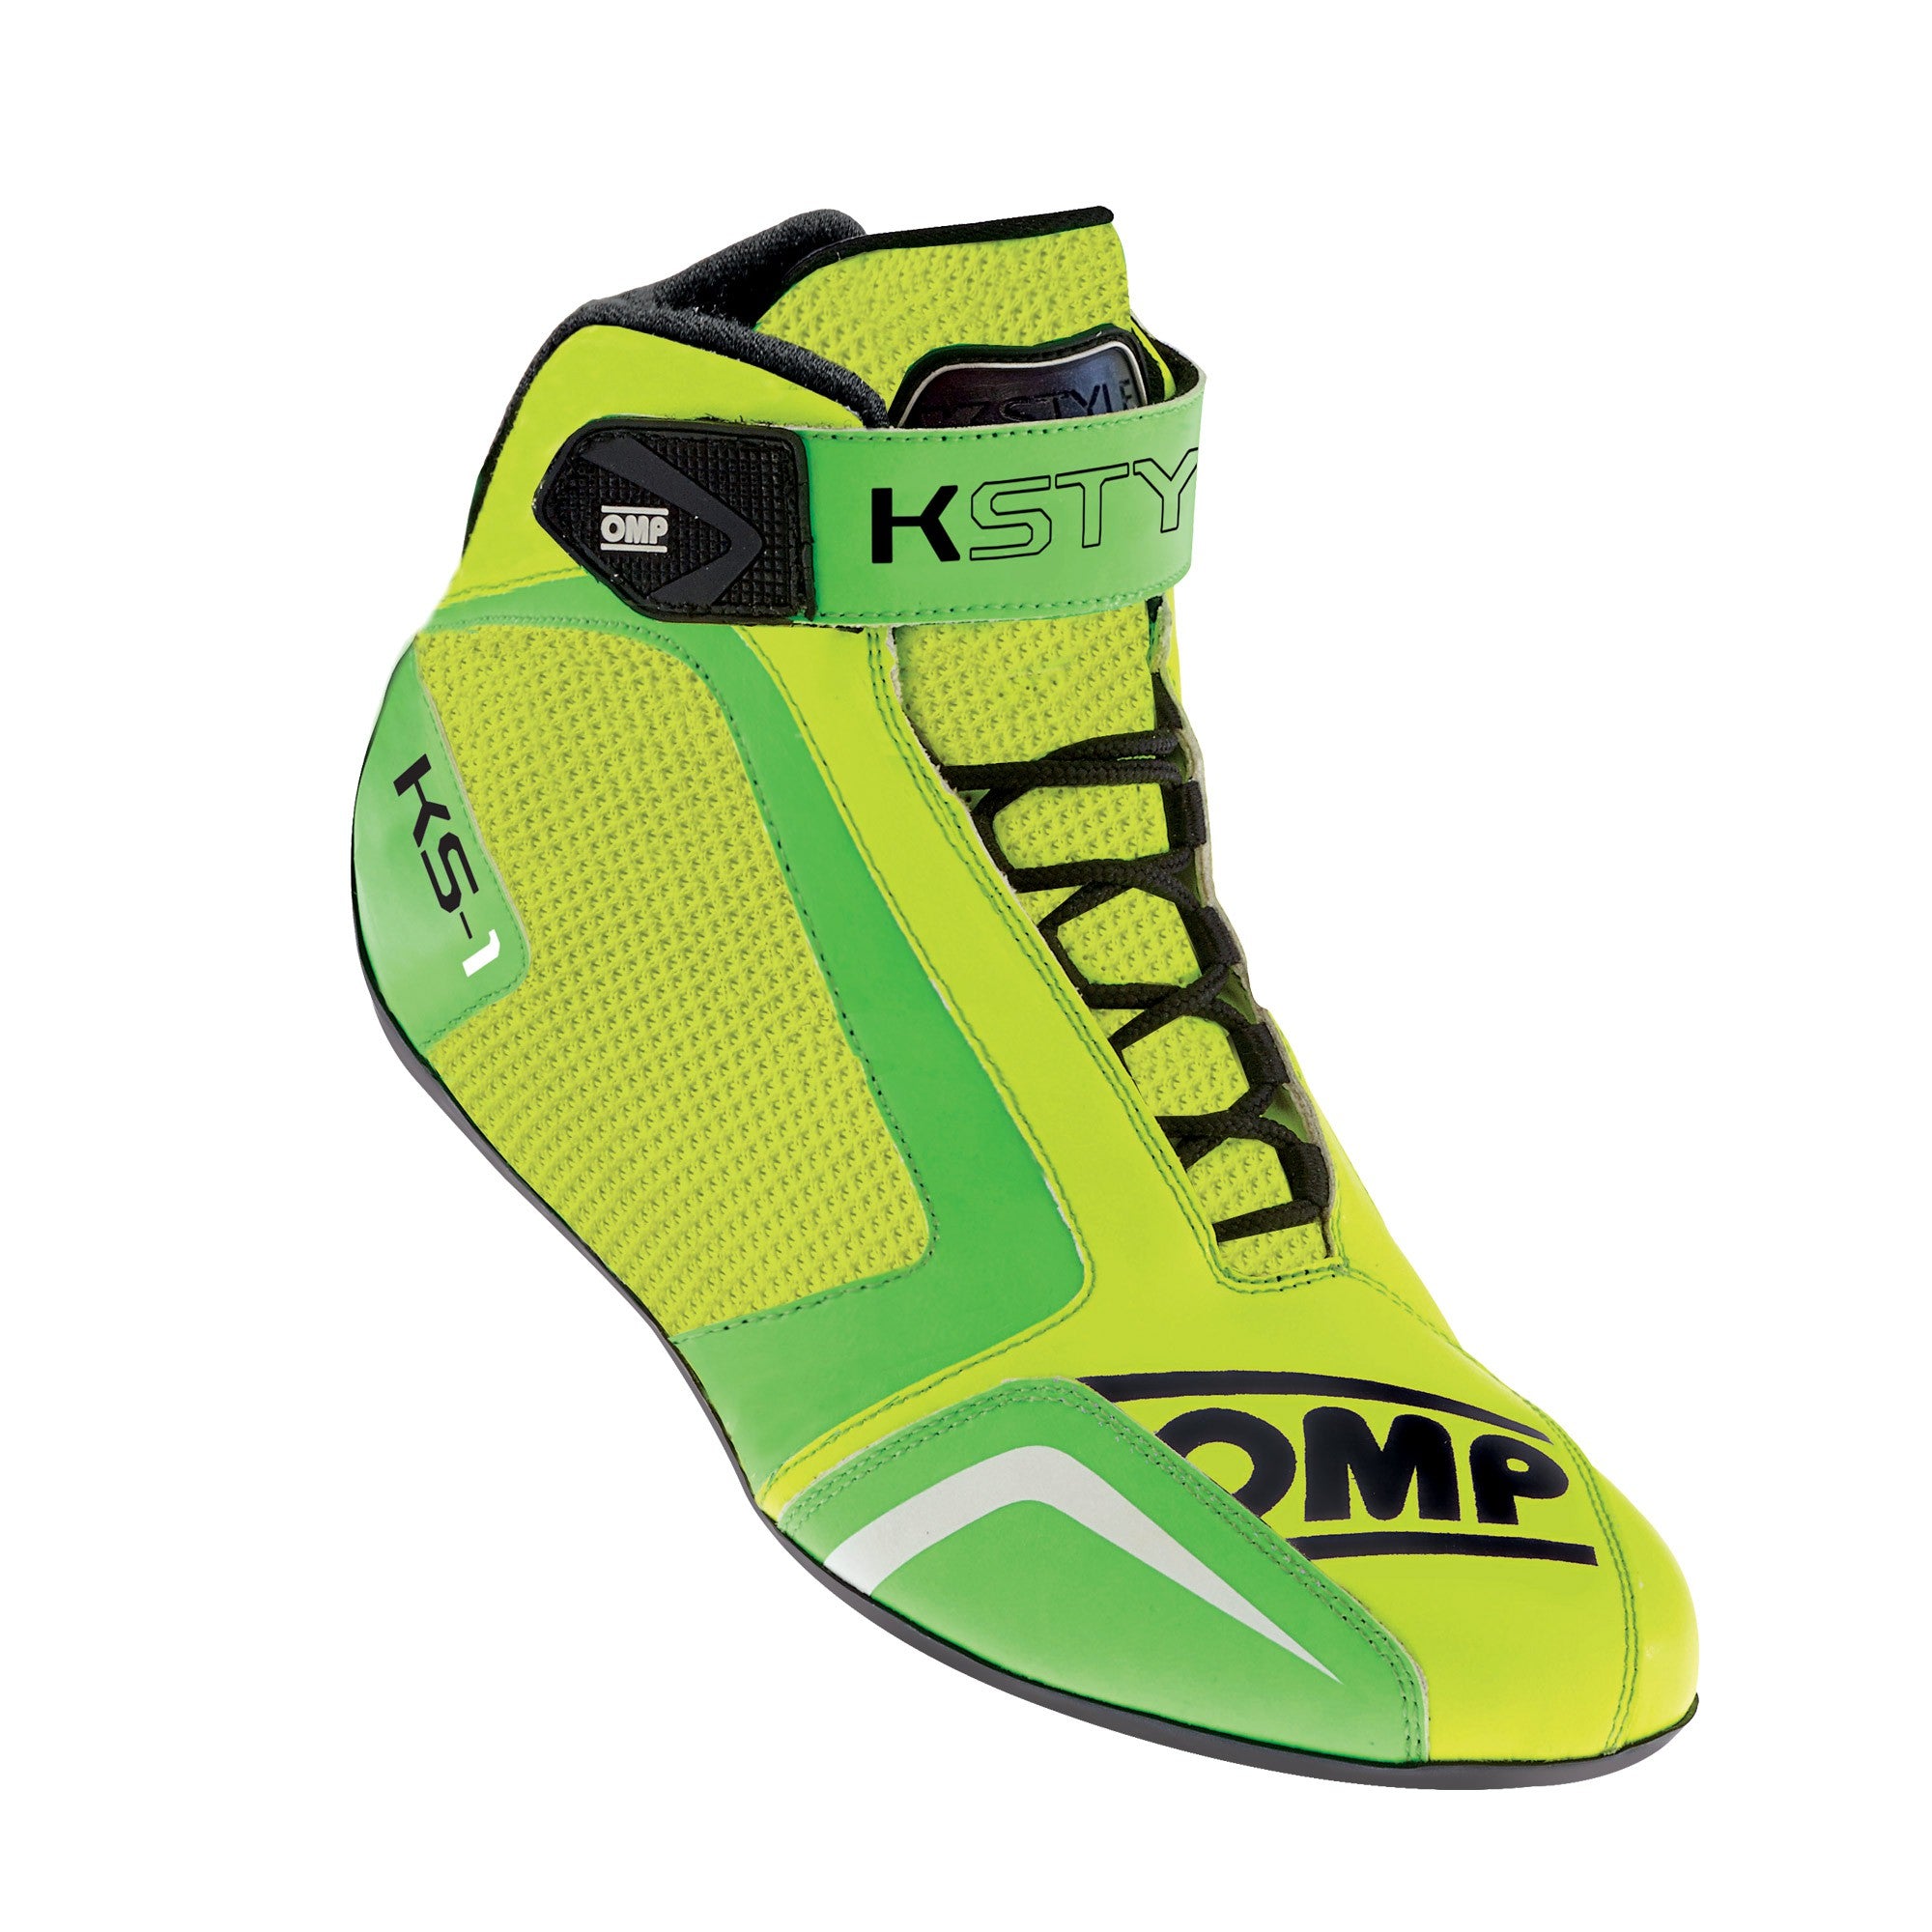 OMP KC0-0815-A01-058-45 (IC/81505845) Kart shoes KS-1, yellow/green, size 45 Photo-0 